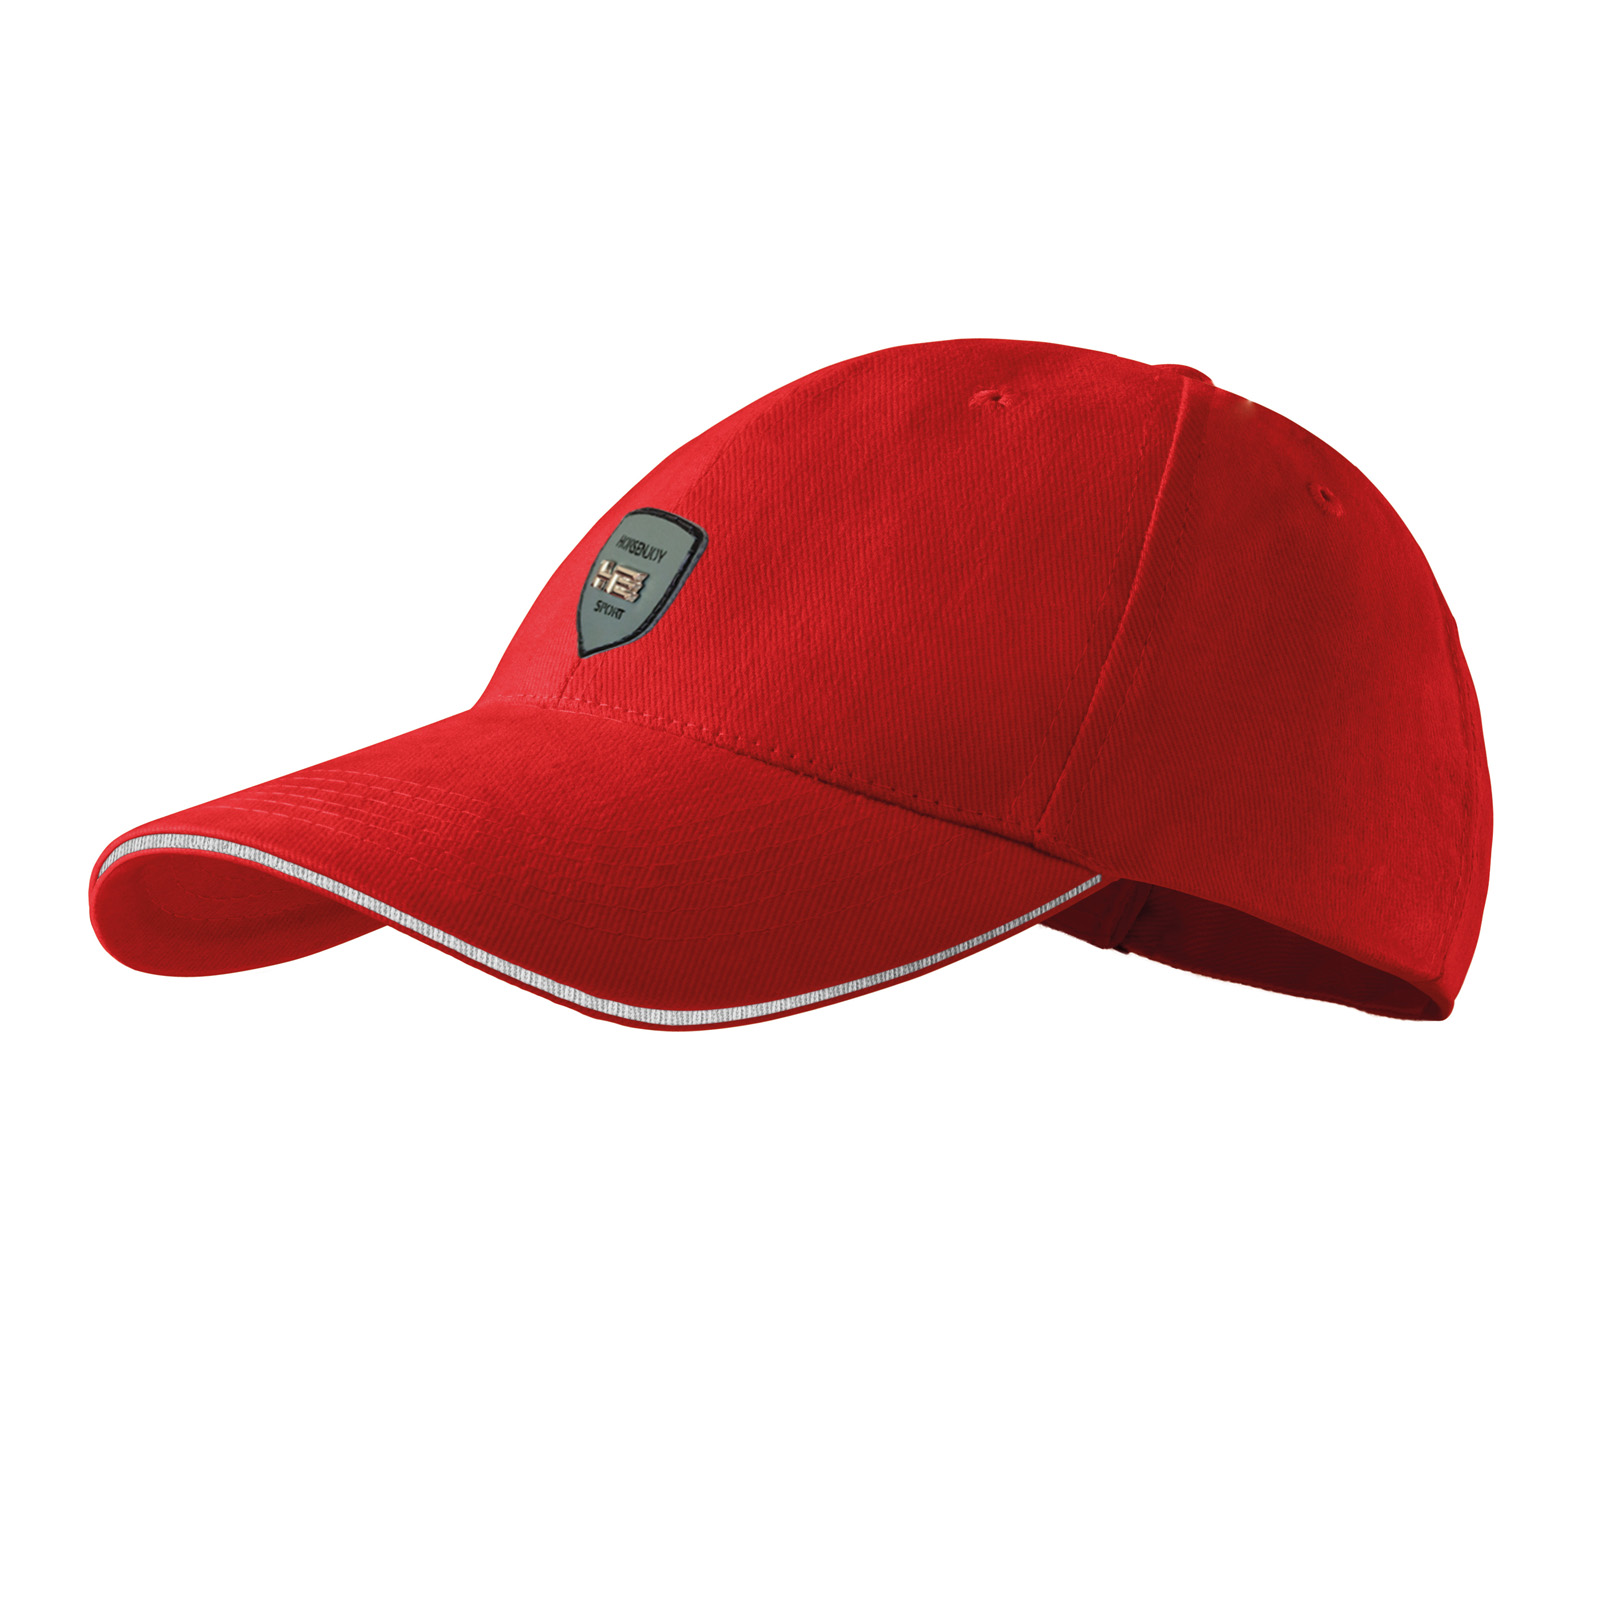 Baseball Kappe Horsenjoy Sport Focus rot | REITER \ Mützen, Stirnbänder &  Caps \ Caps | Tytuł sklepu zmienisz w dziale MODERACJA \ SEO